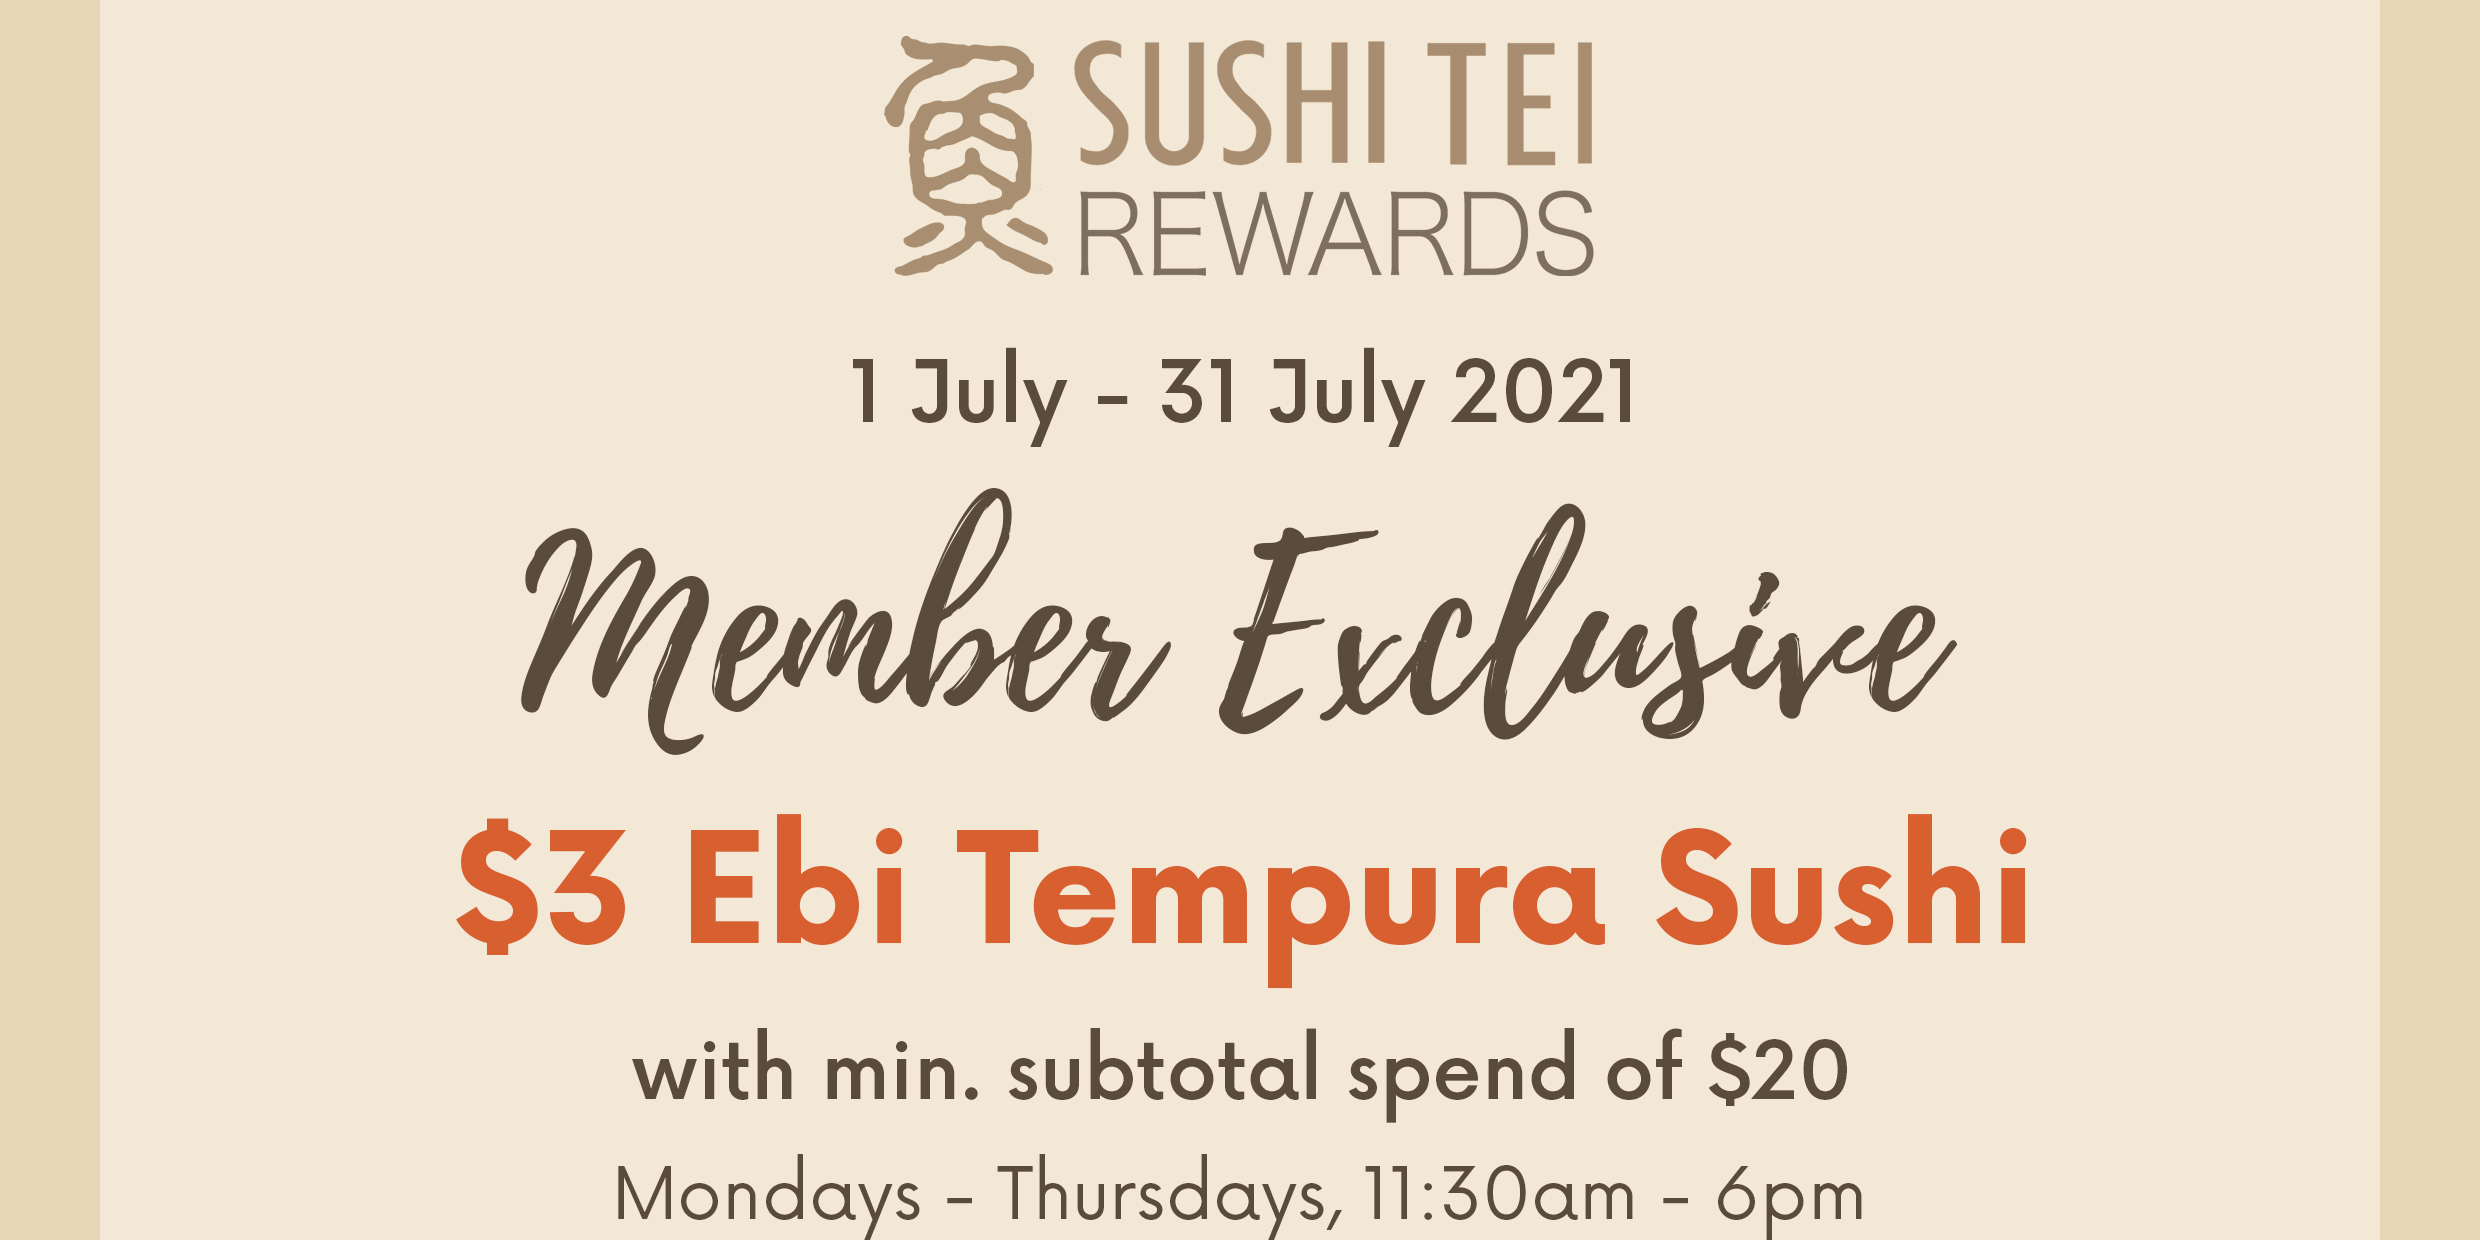 $3 Ebi Tempura Sushi for Sushi Tei Members from 1st – 31st July 2021 